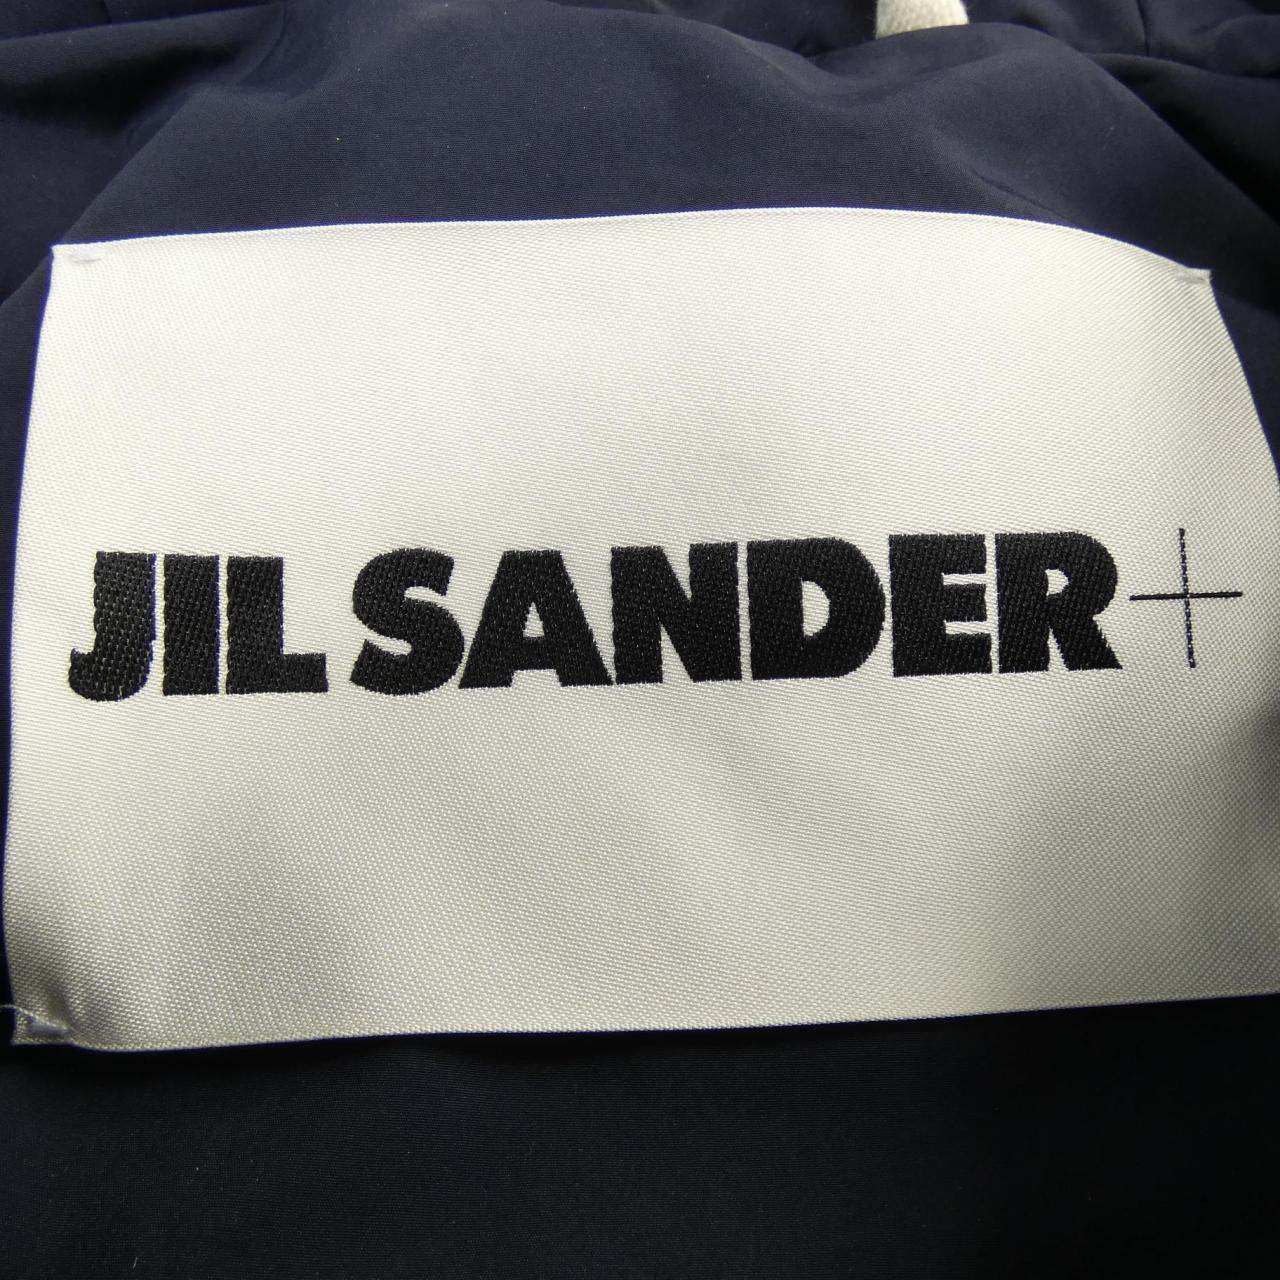 JIL SANDER+ JIL SANDER+ 羽绒夹克